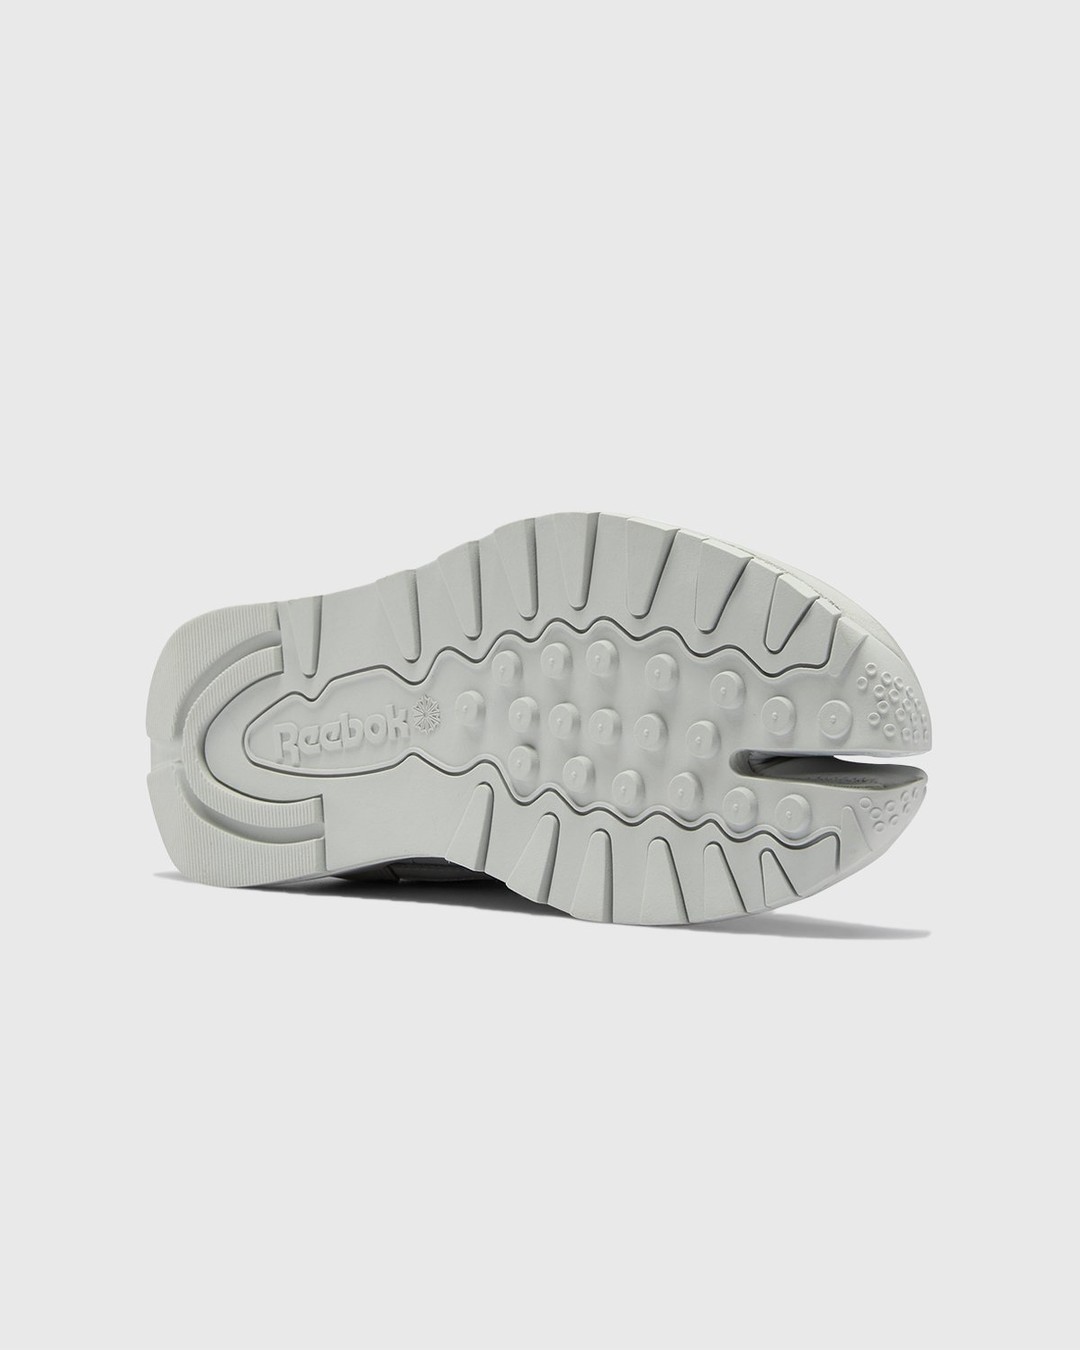 Maison Margiela x Reebok – Classic Leather Tabi Grey - Low Top Sneakers - Grey - Image 8